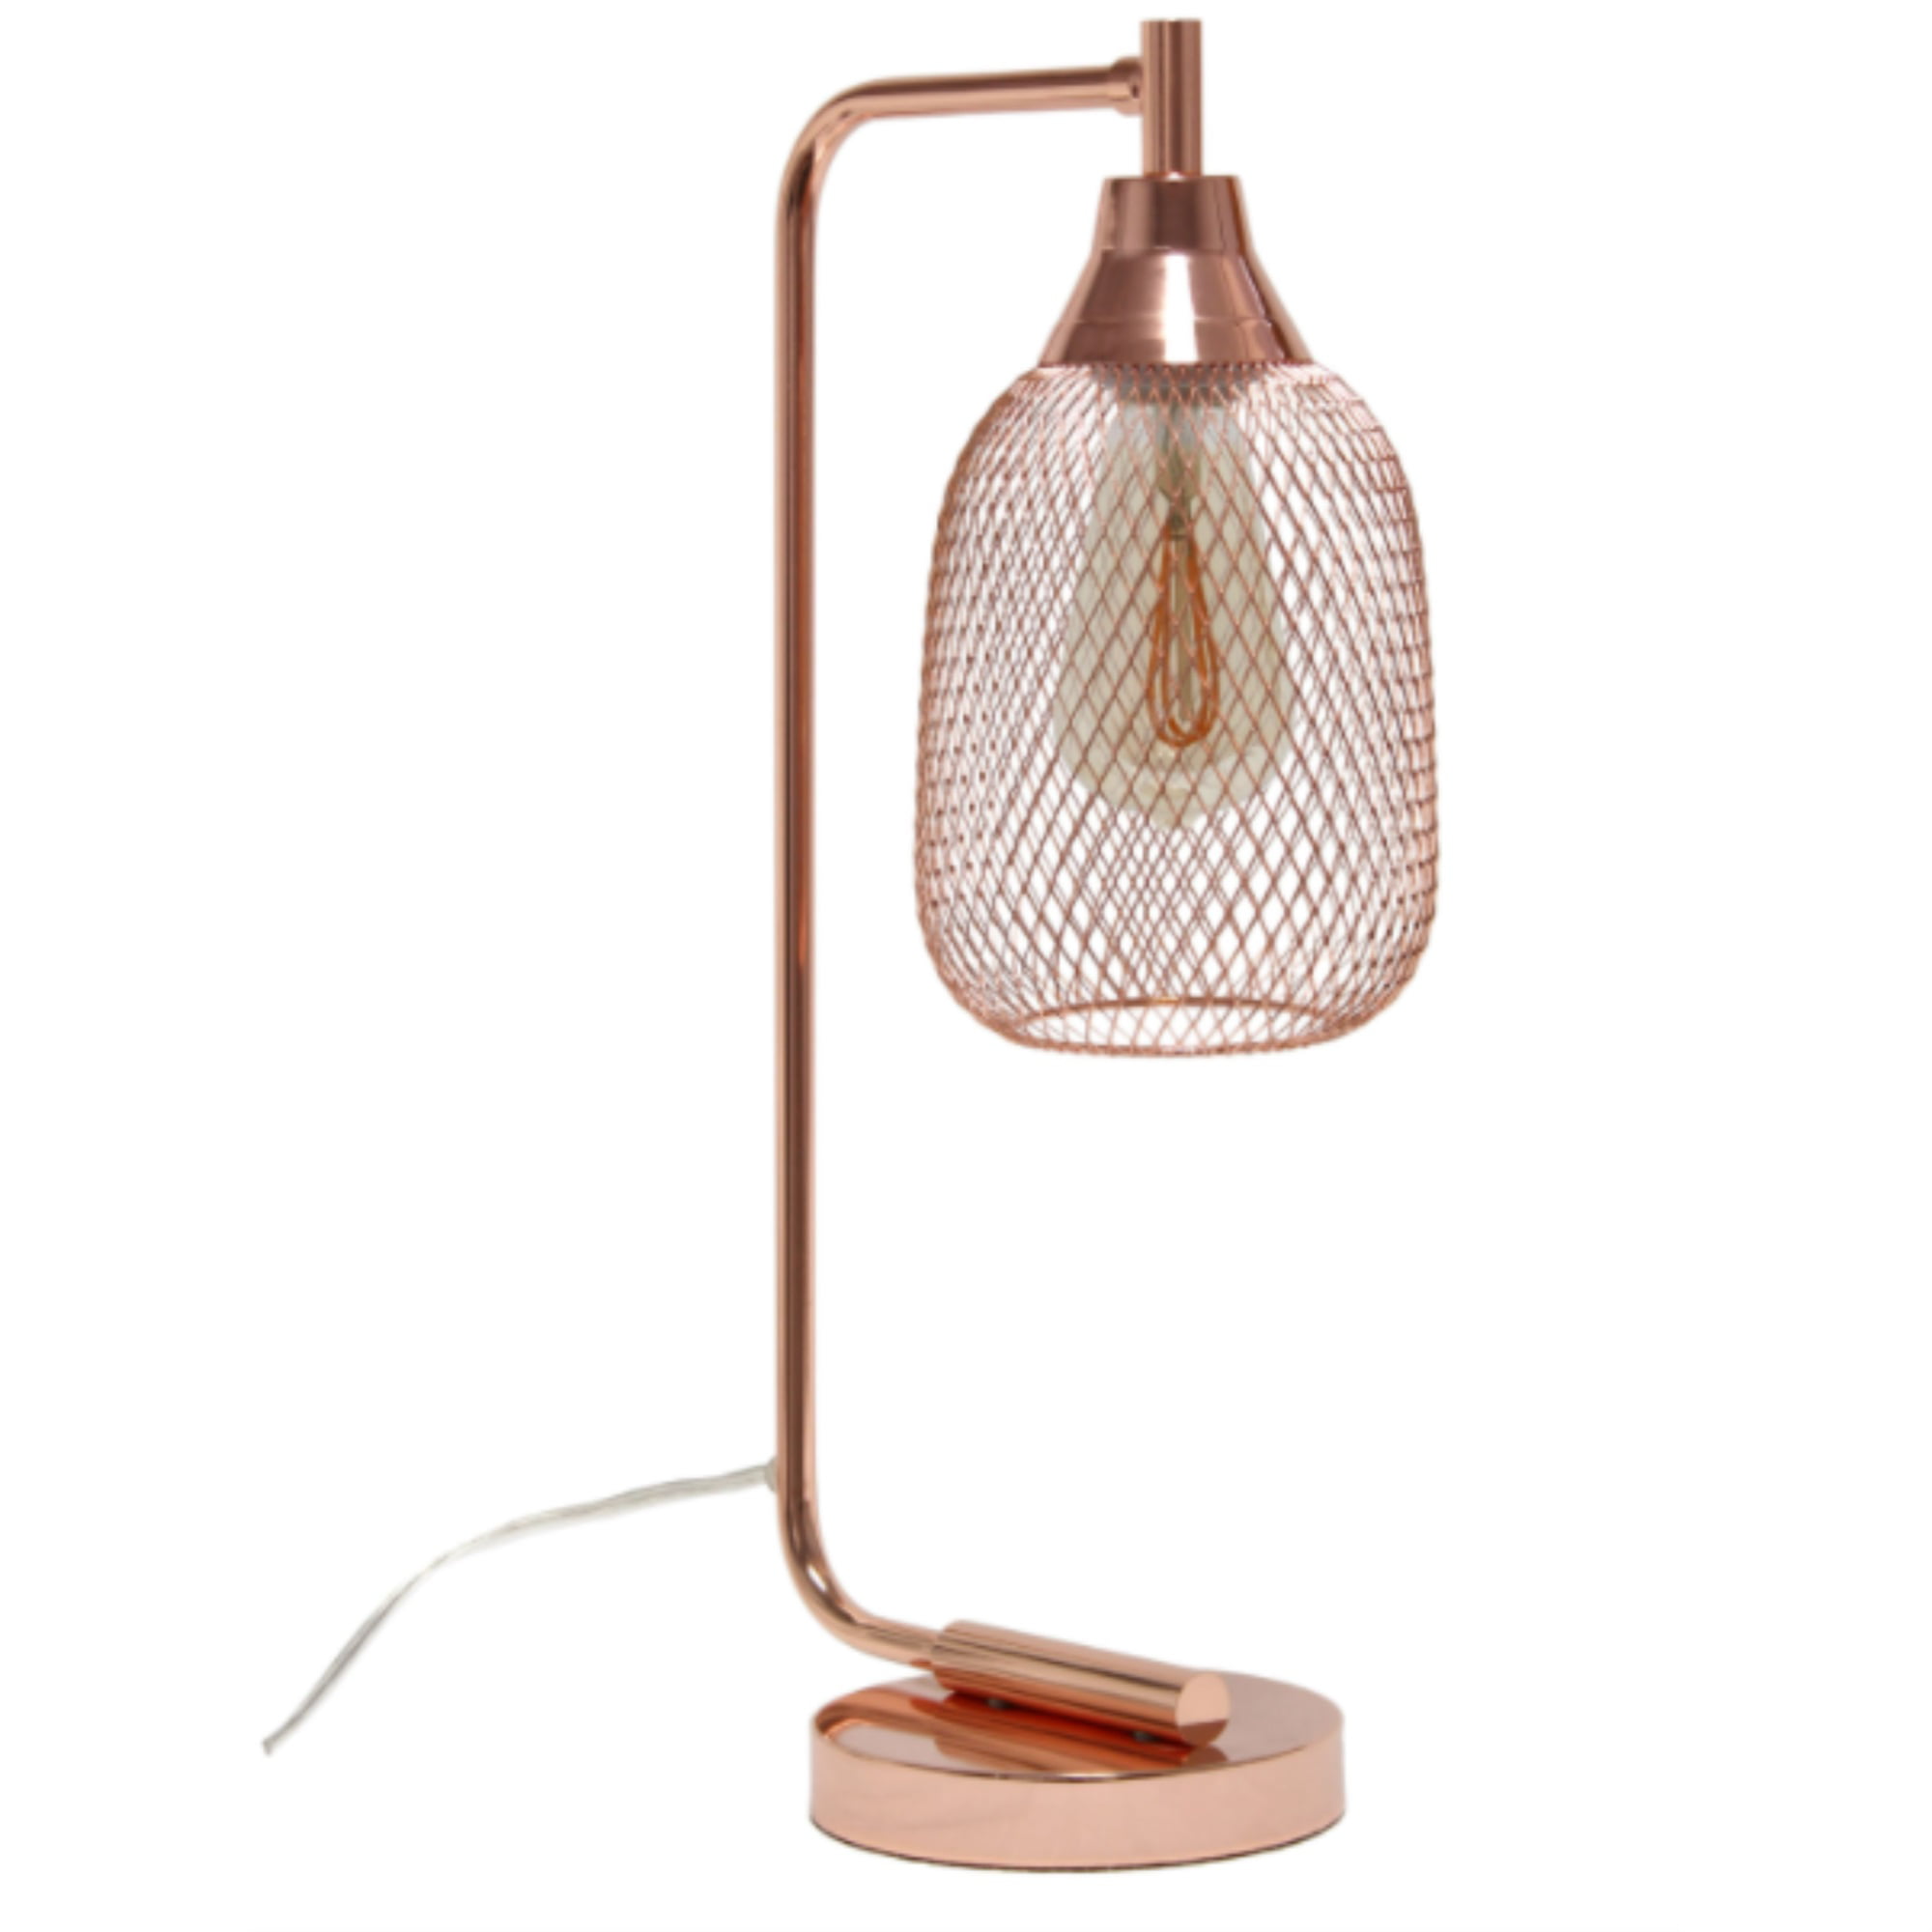 Lalia Home Industrial Mesh Desk Lamp, Rose Gold